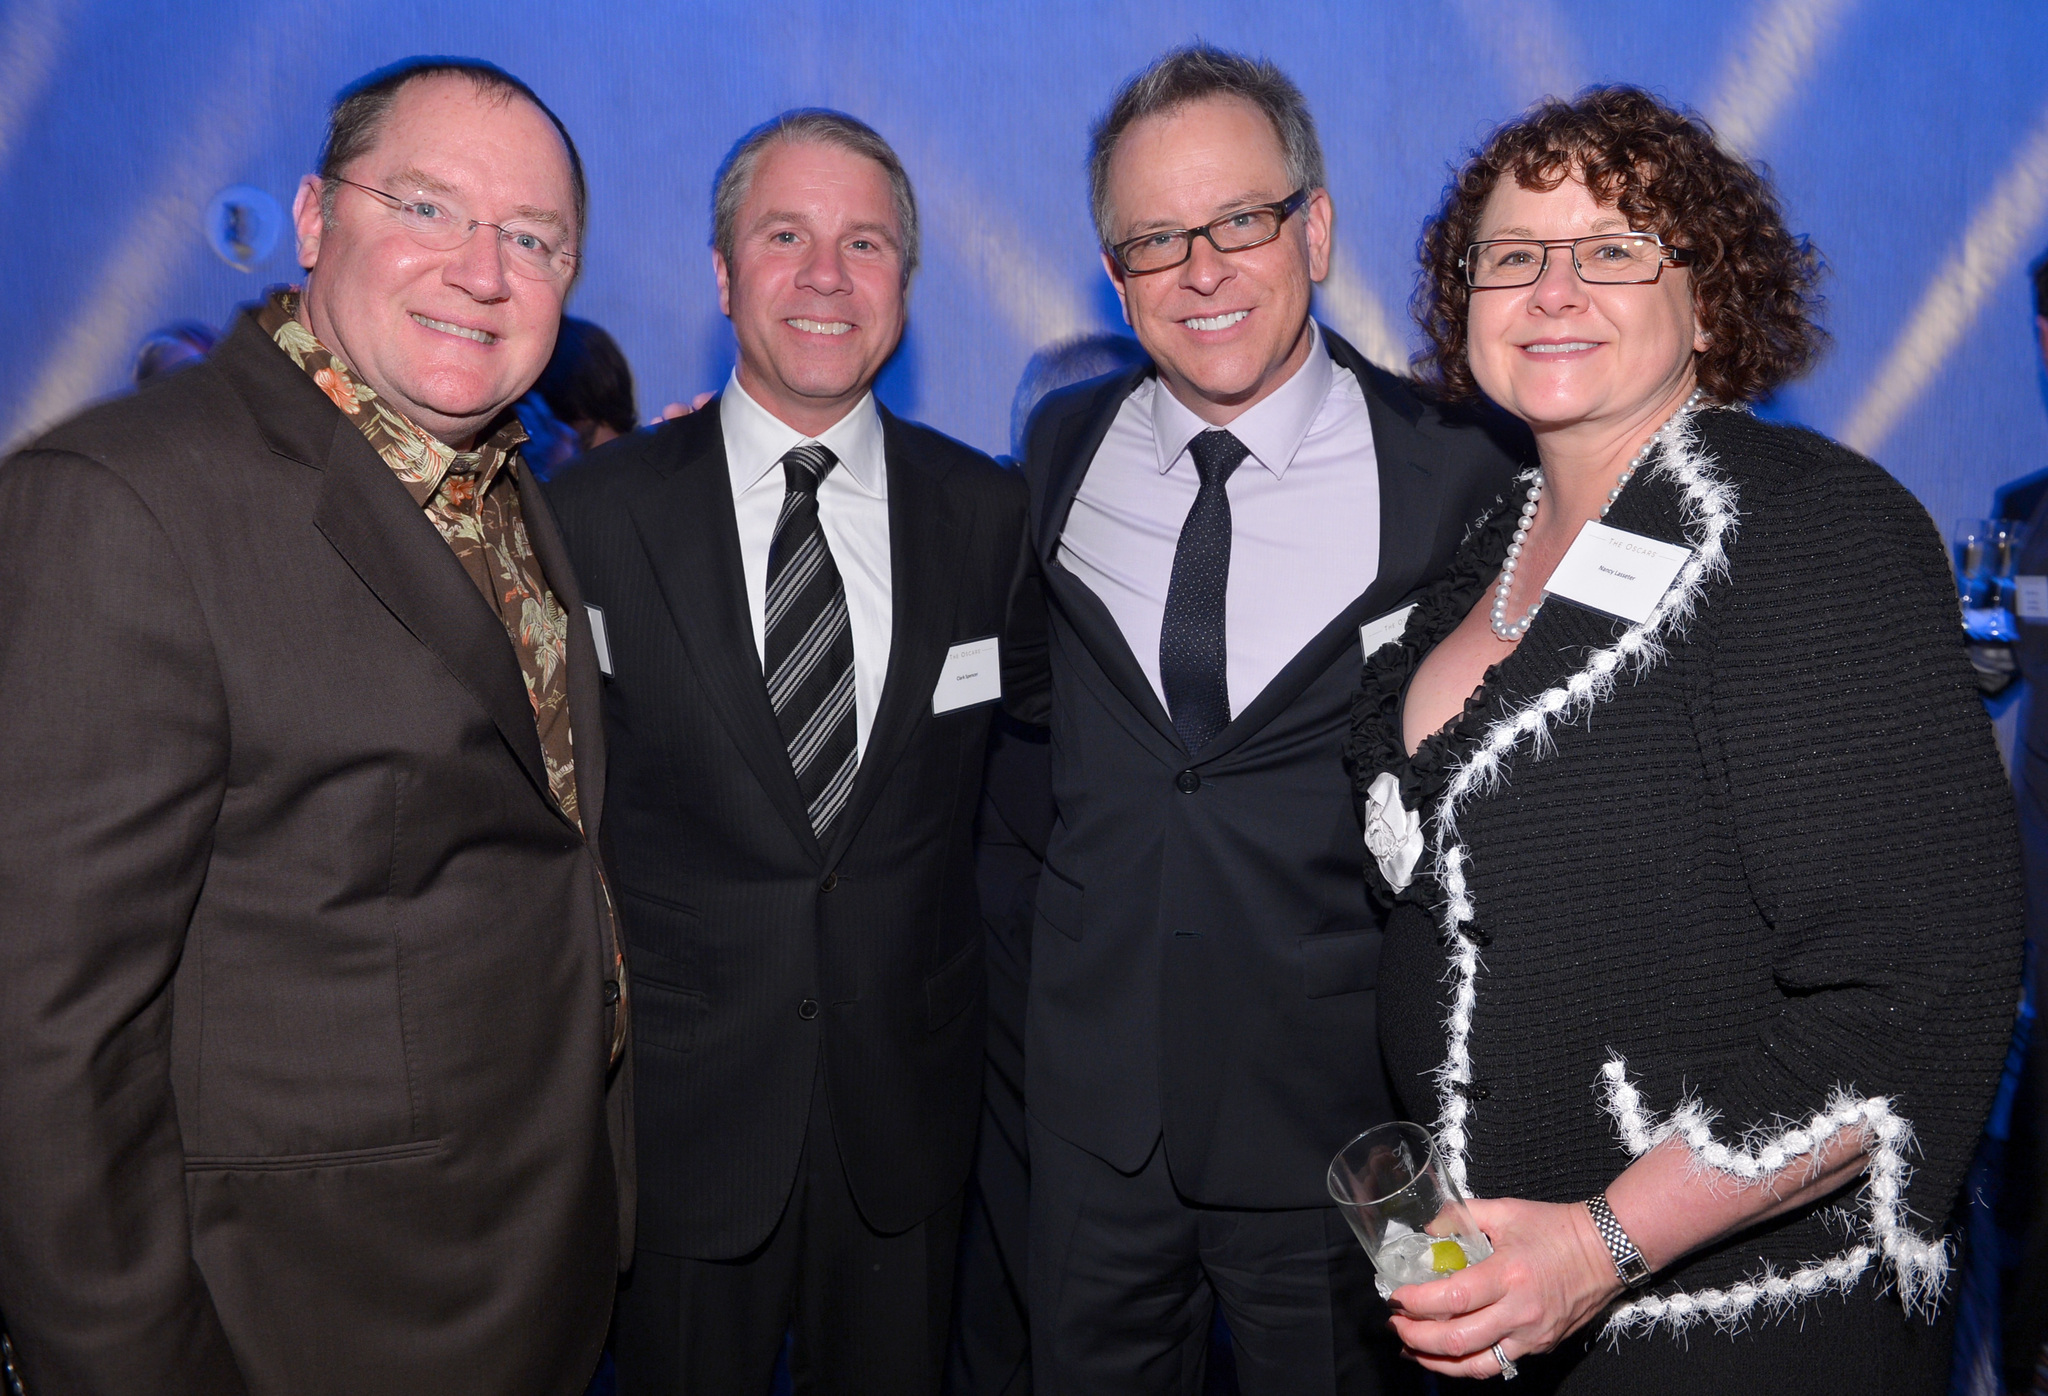 John Lasseter, Rich Moore, Clark Spencer and Nancy Lasseter